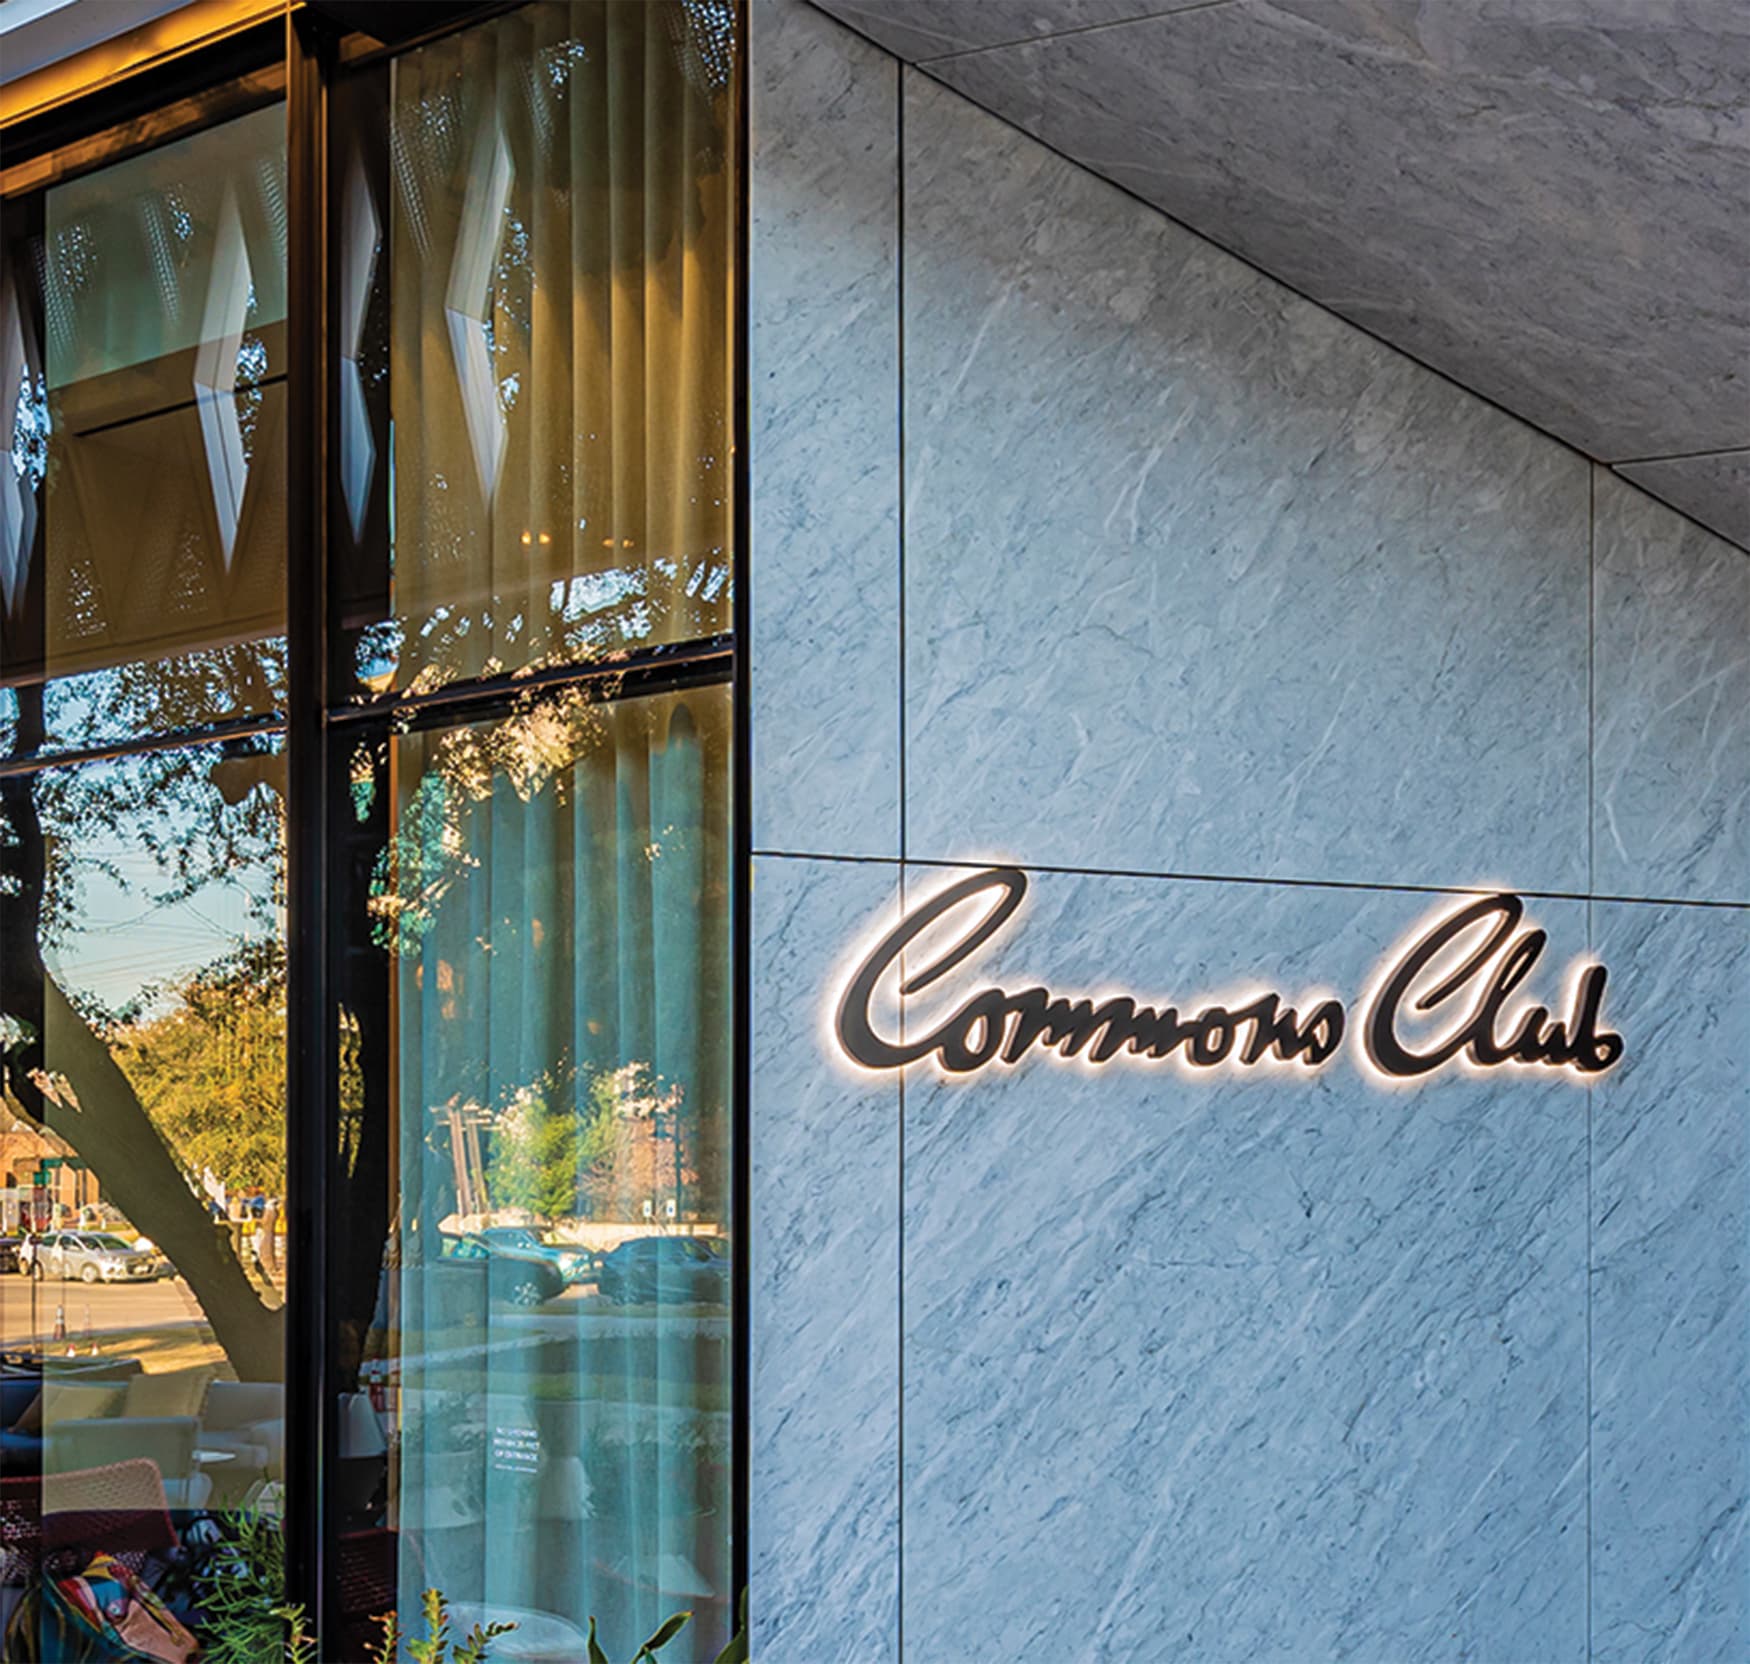 Commons Club at Virgin Hotel Dallas signage with halo illumination.